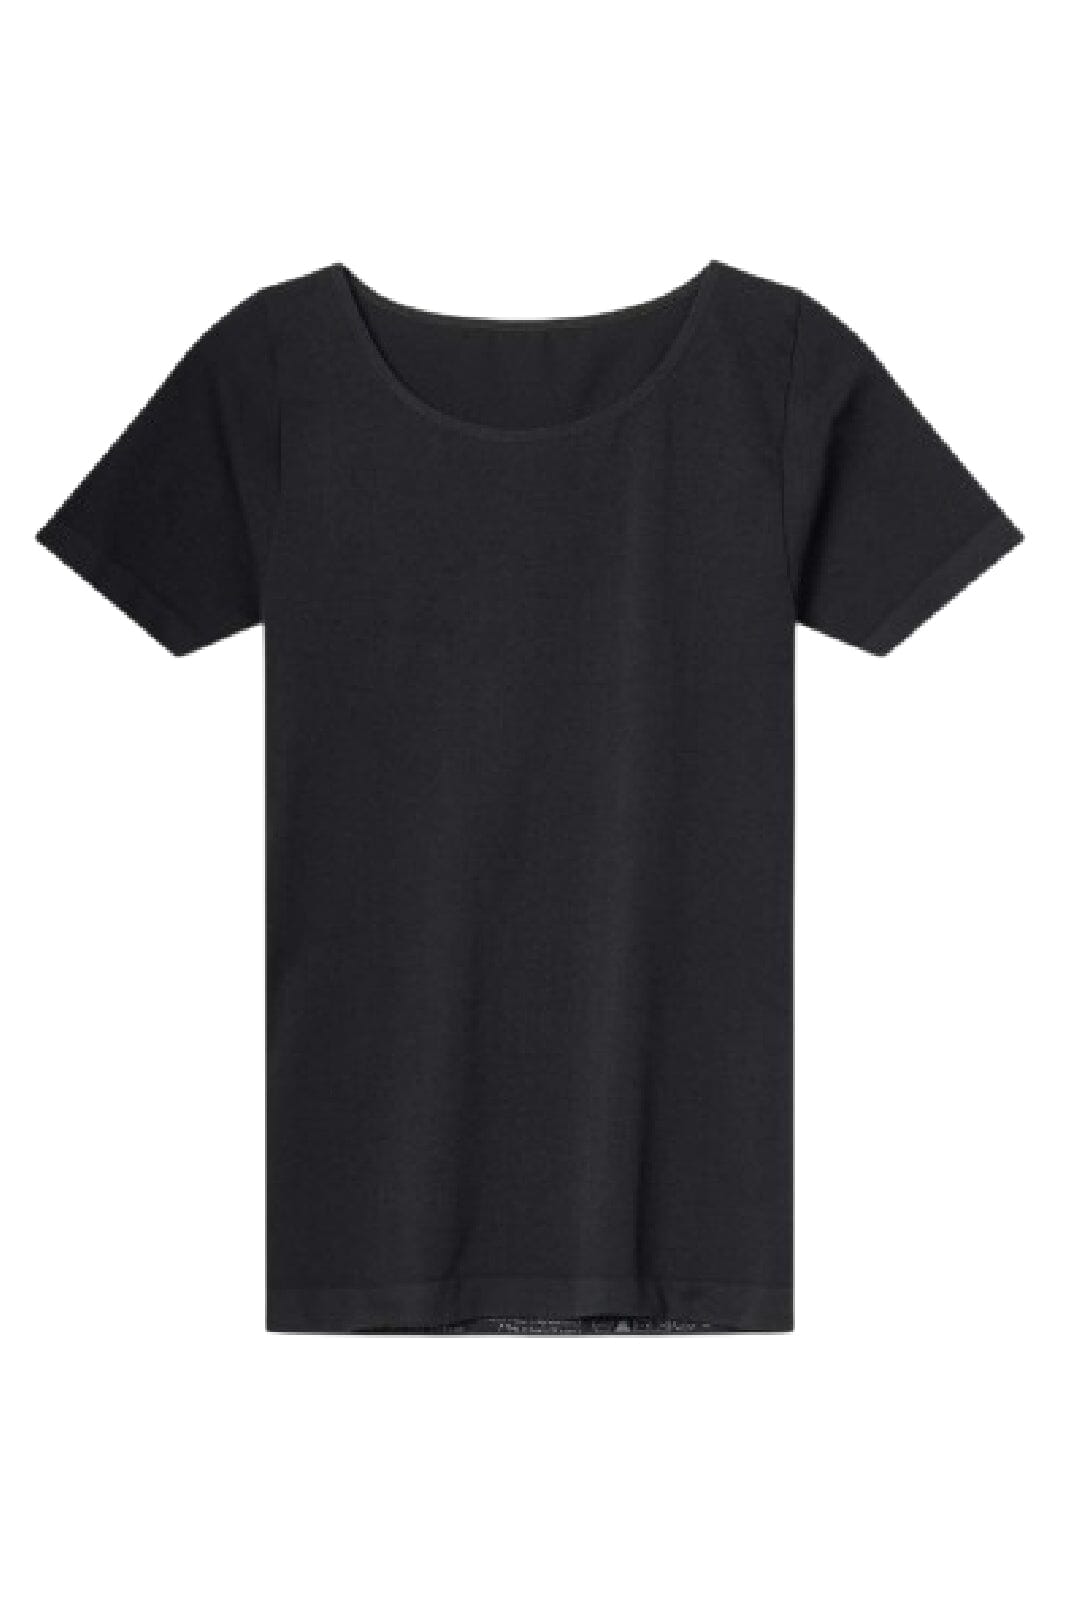 Molly&My Wardrobe - Luise T-shirt - Black T-shirts 